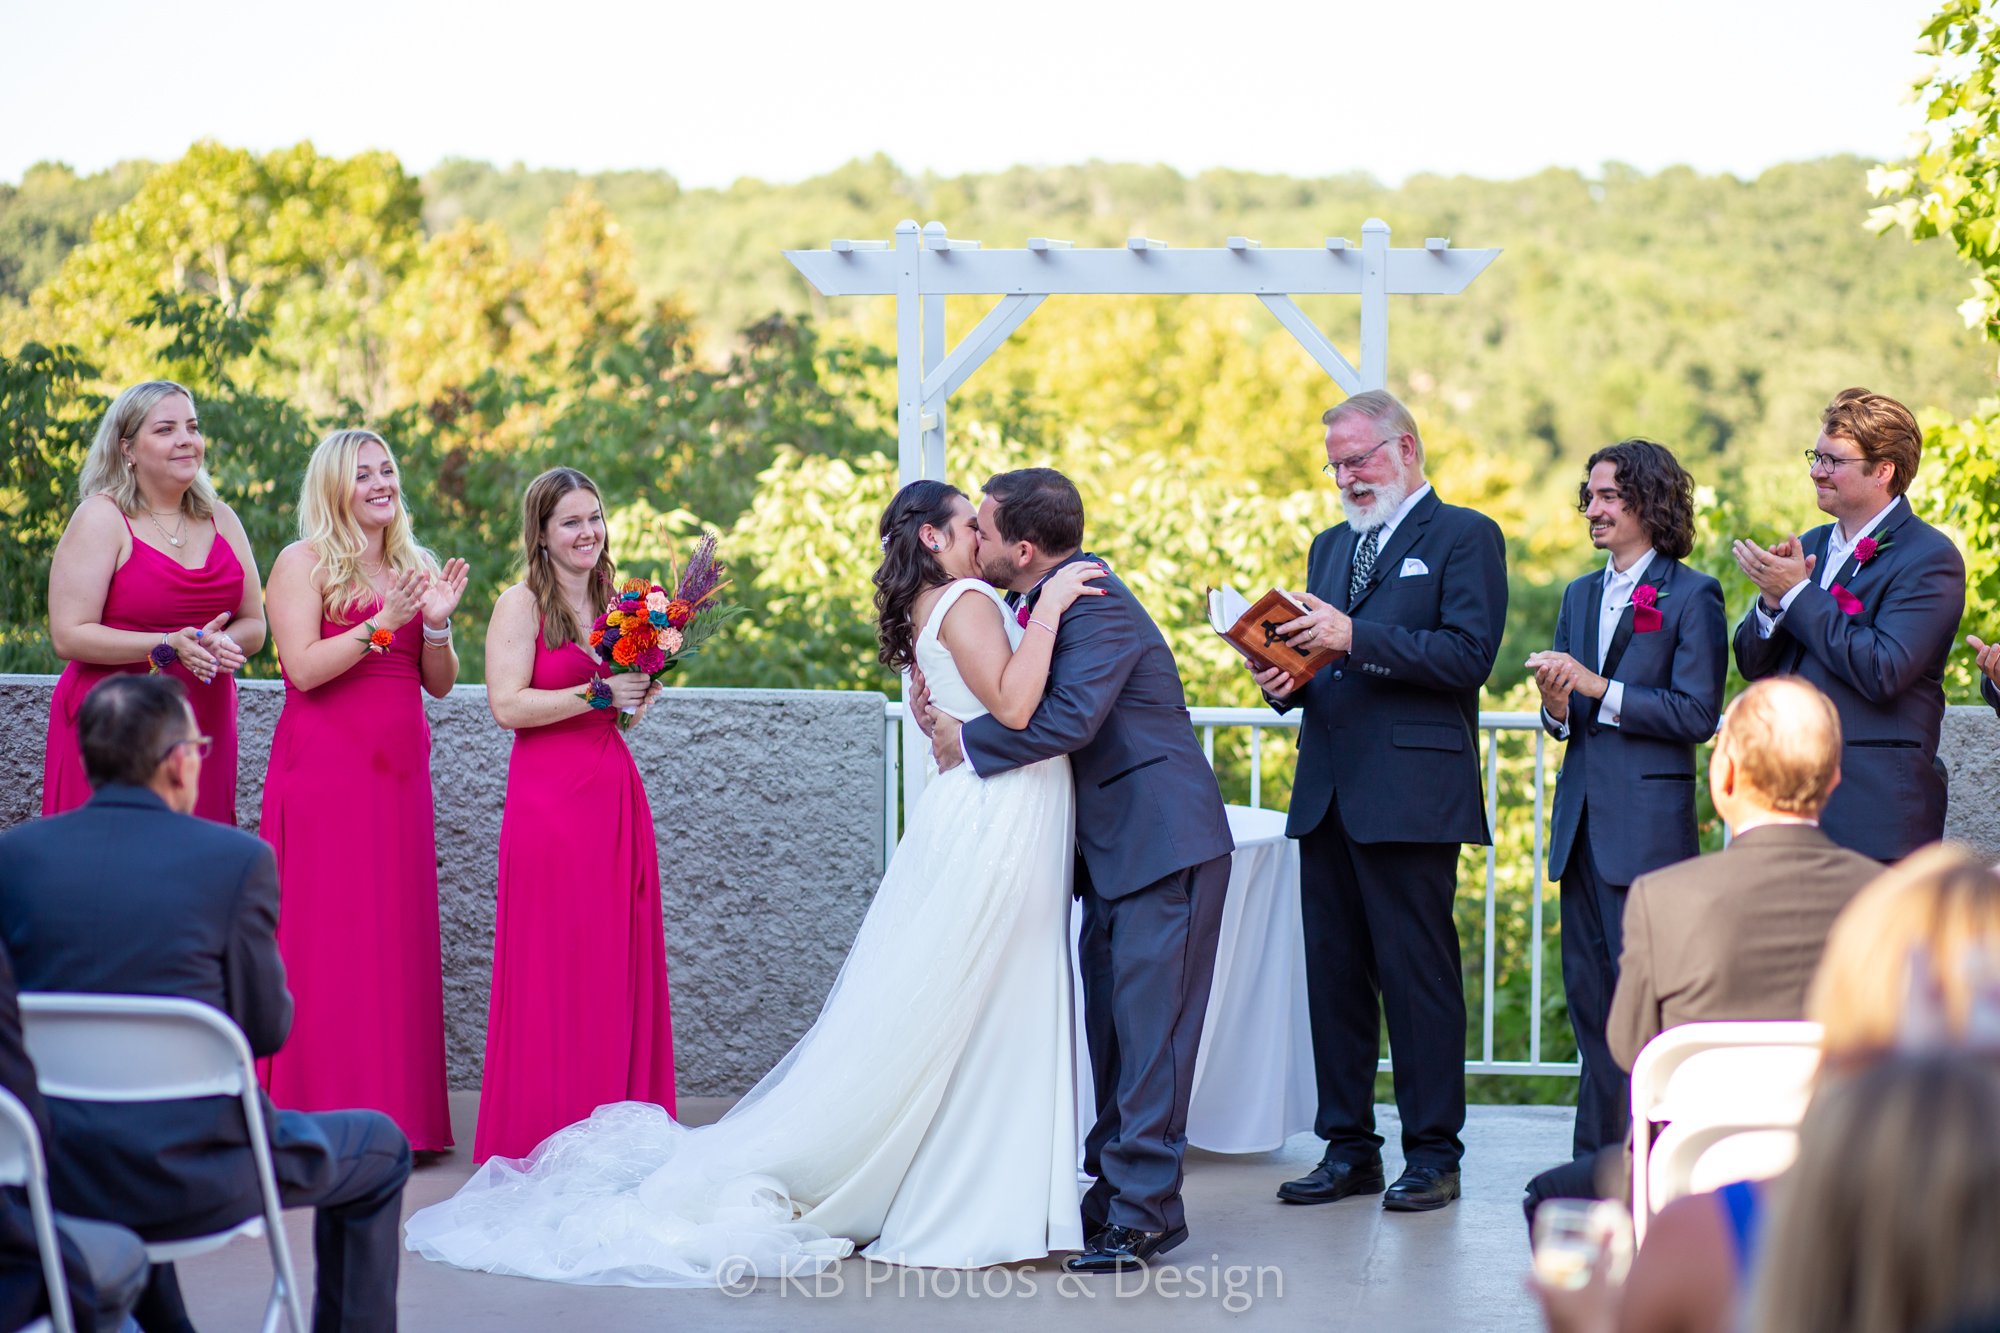 Wedding-Kirk-Darby-Lake-of-the-Ozarks-Margaritaville-Missouri-Jefferson-City-wedding-photos-KB-Photos-and-Design-389.jpg